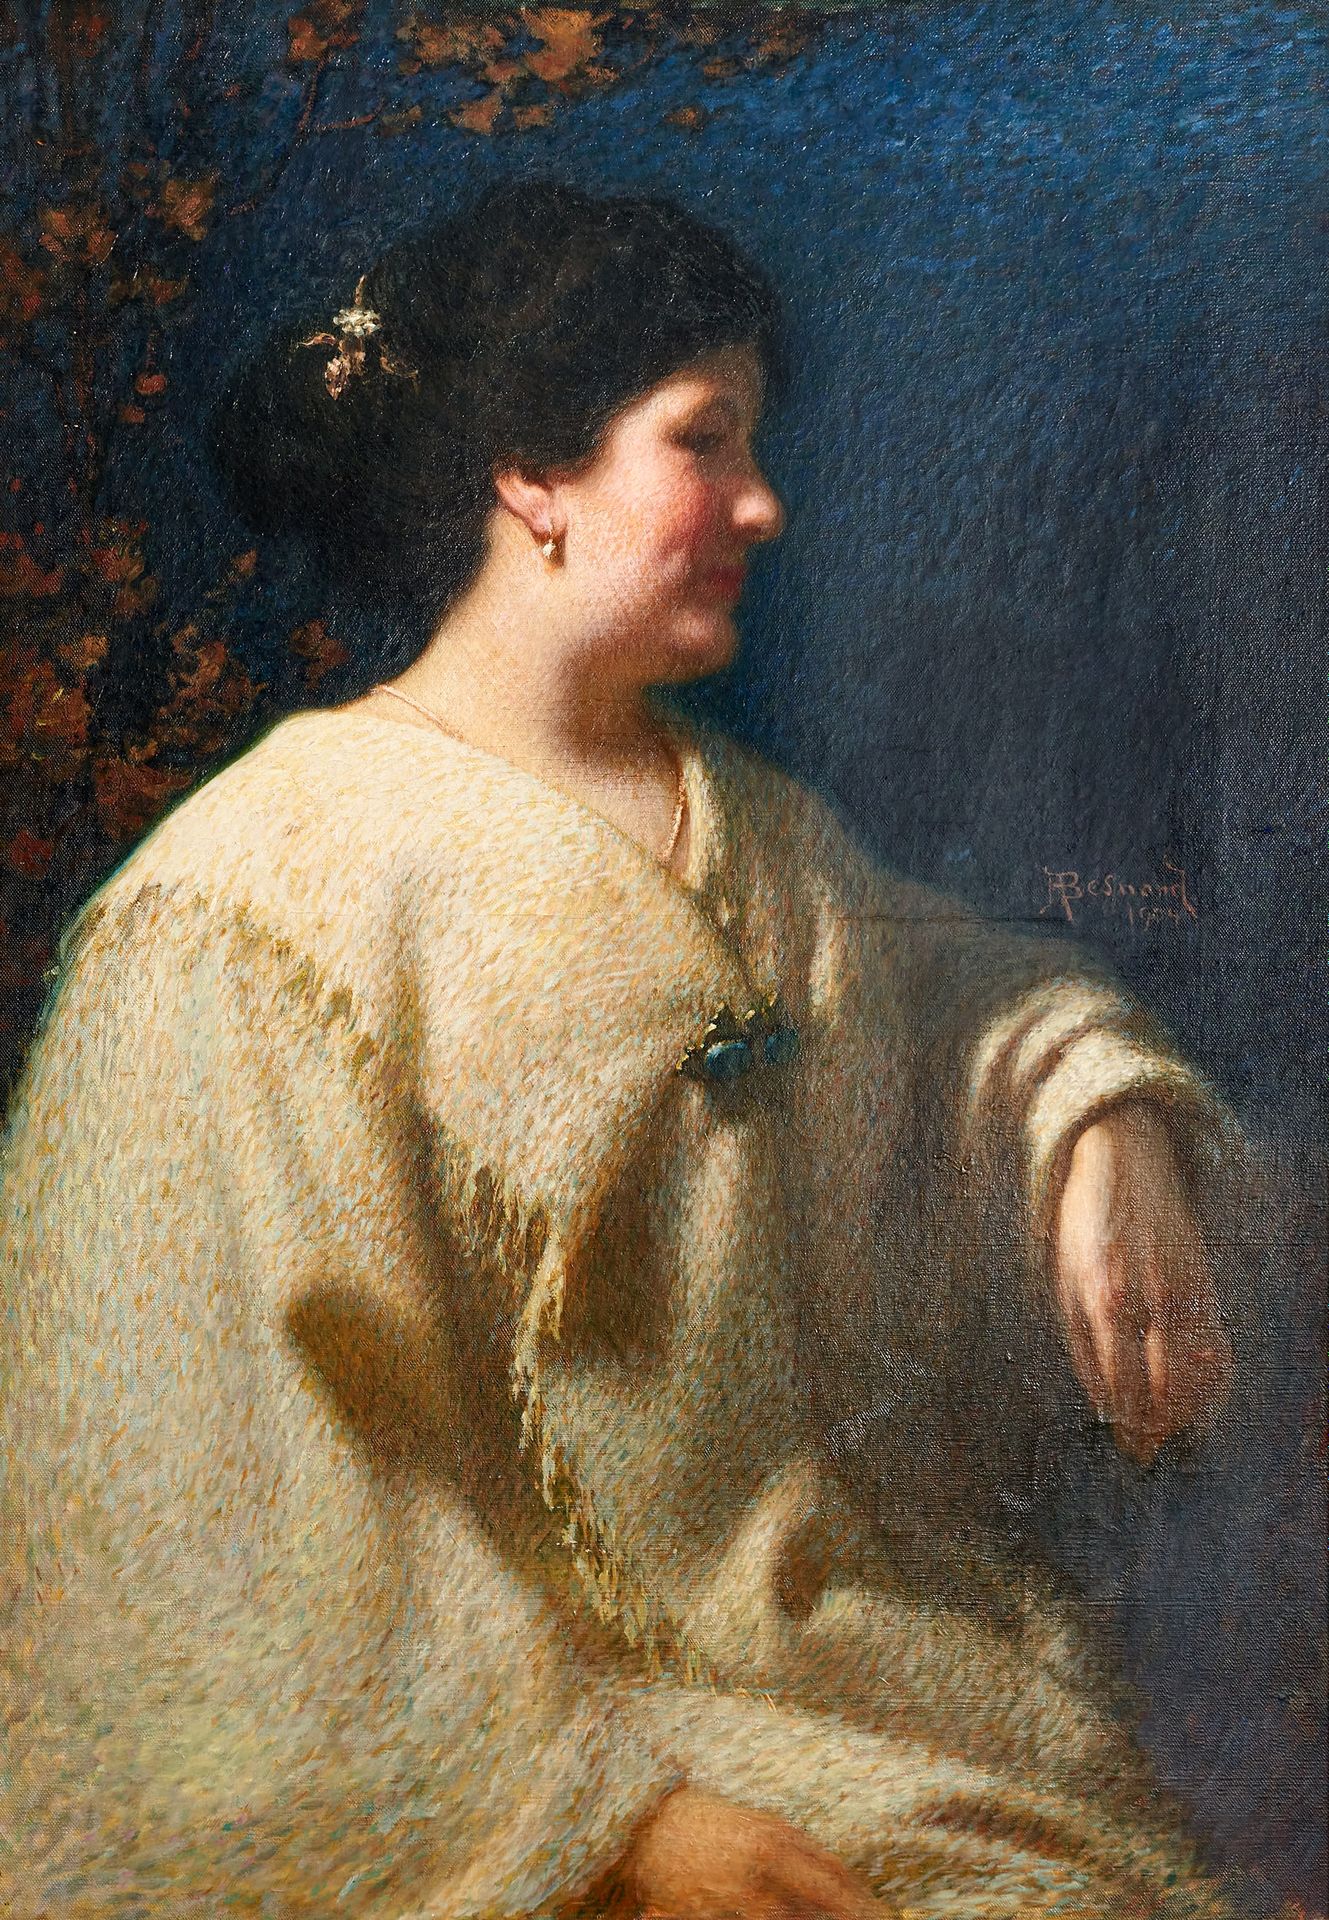 Null 阿尔伯特-贝斯纳德(1849-1934)

一位女士的肖像

布面油画

右侧有签名和日期

高：100 x 宽：70厘米